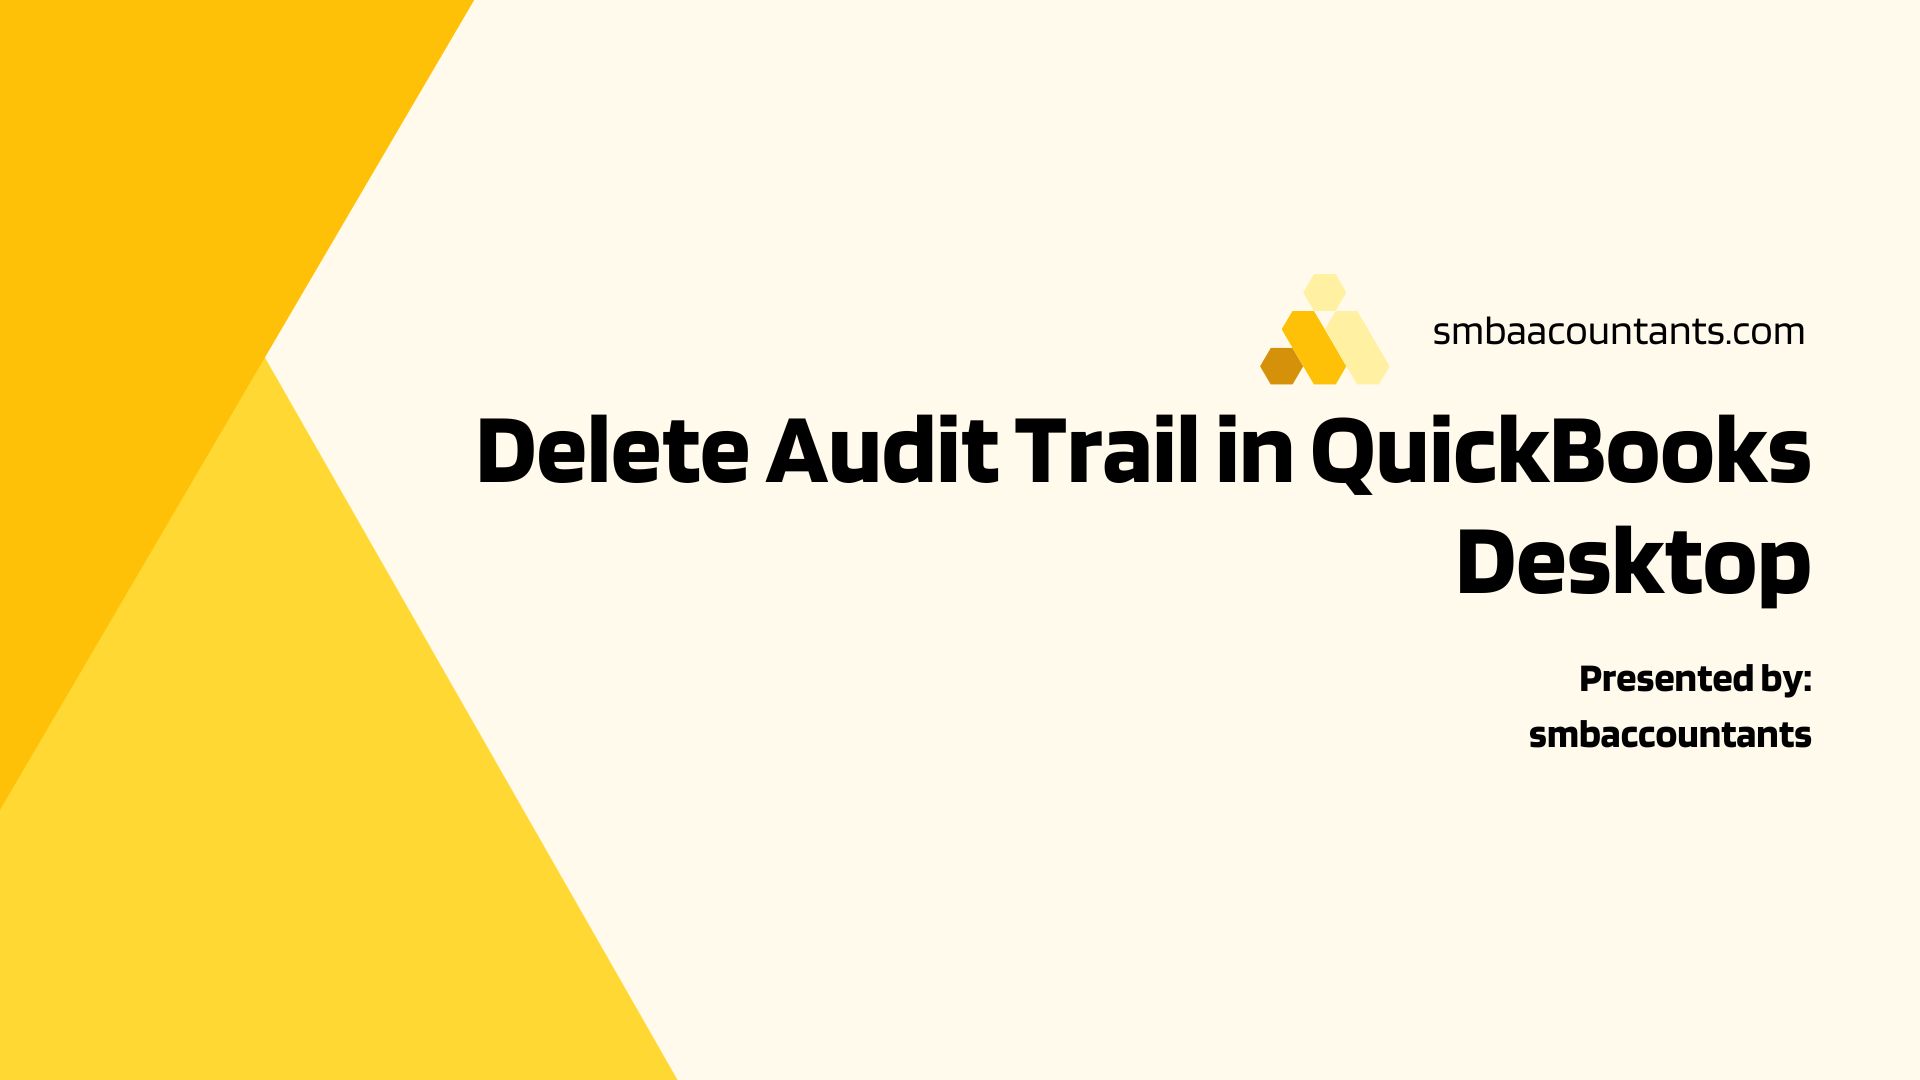 How to Delete Audit Trail in QuickBooks Desktop?